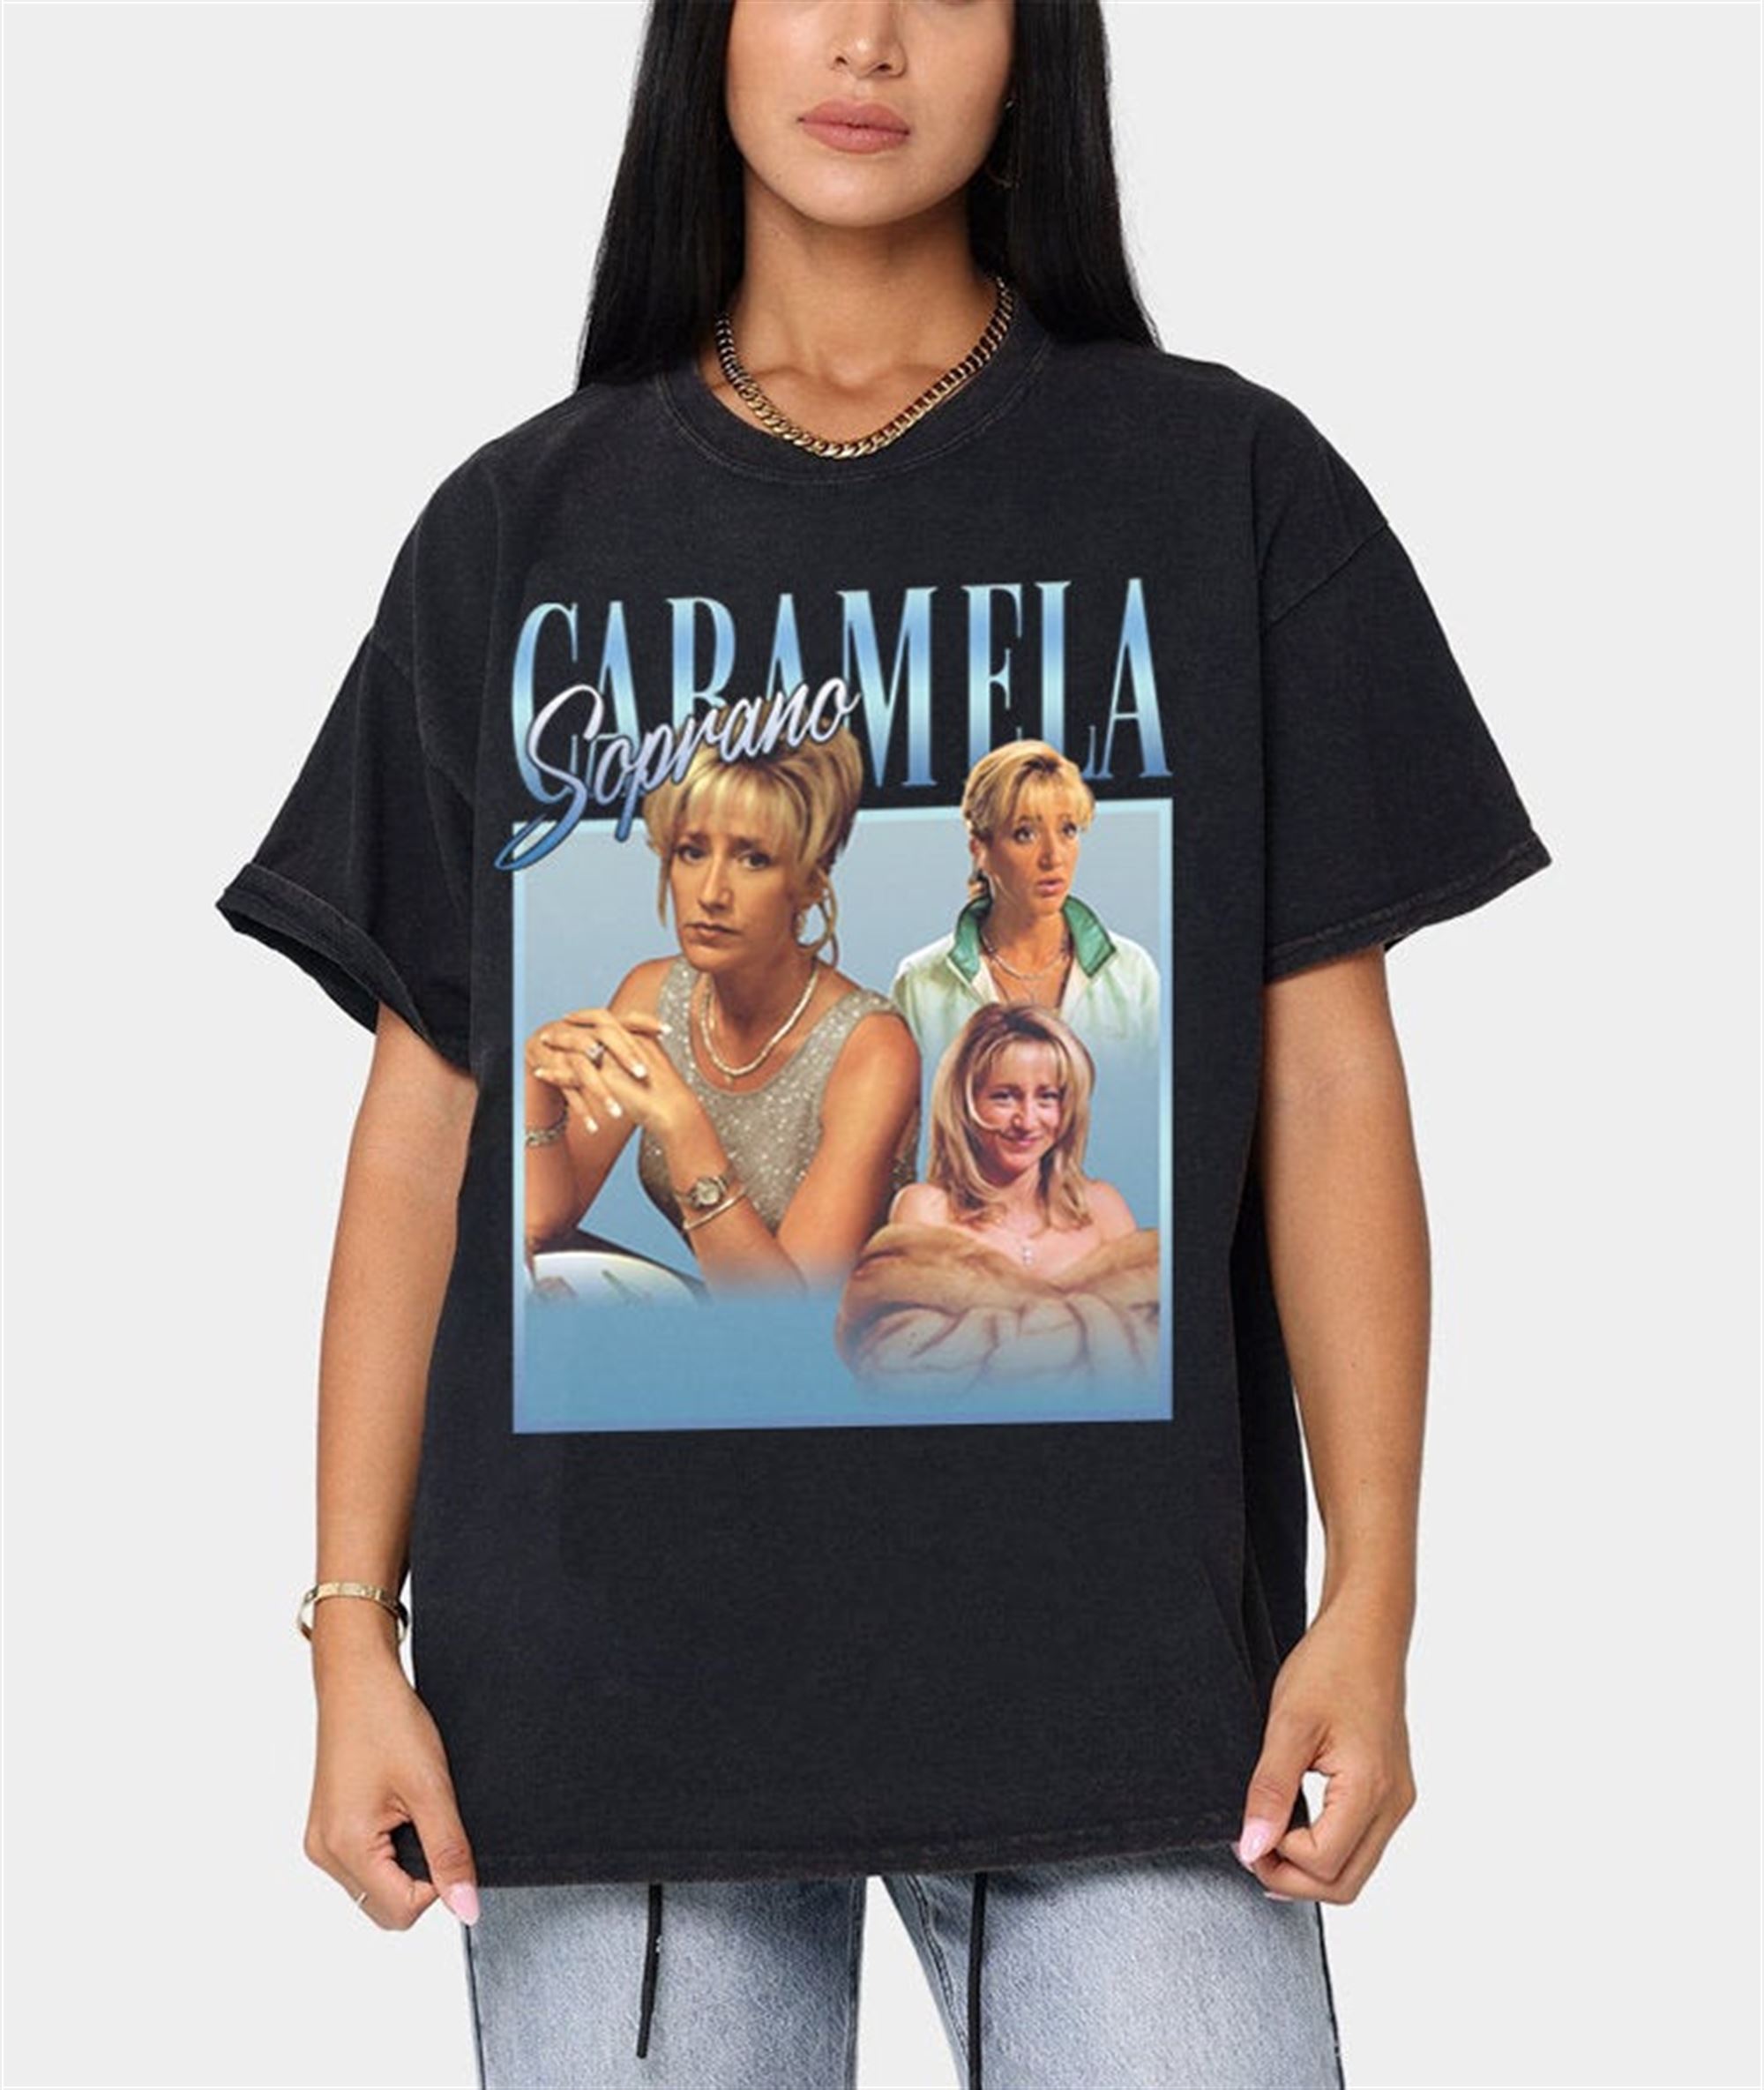 Carmela Soprano Shirt Mafia Inspired Carmela Soprano Homage Italian American Fashion Shirtcarmela Soprano Gift Merchedie Falco H-m5-7-7